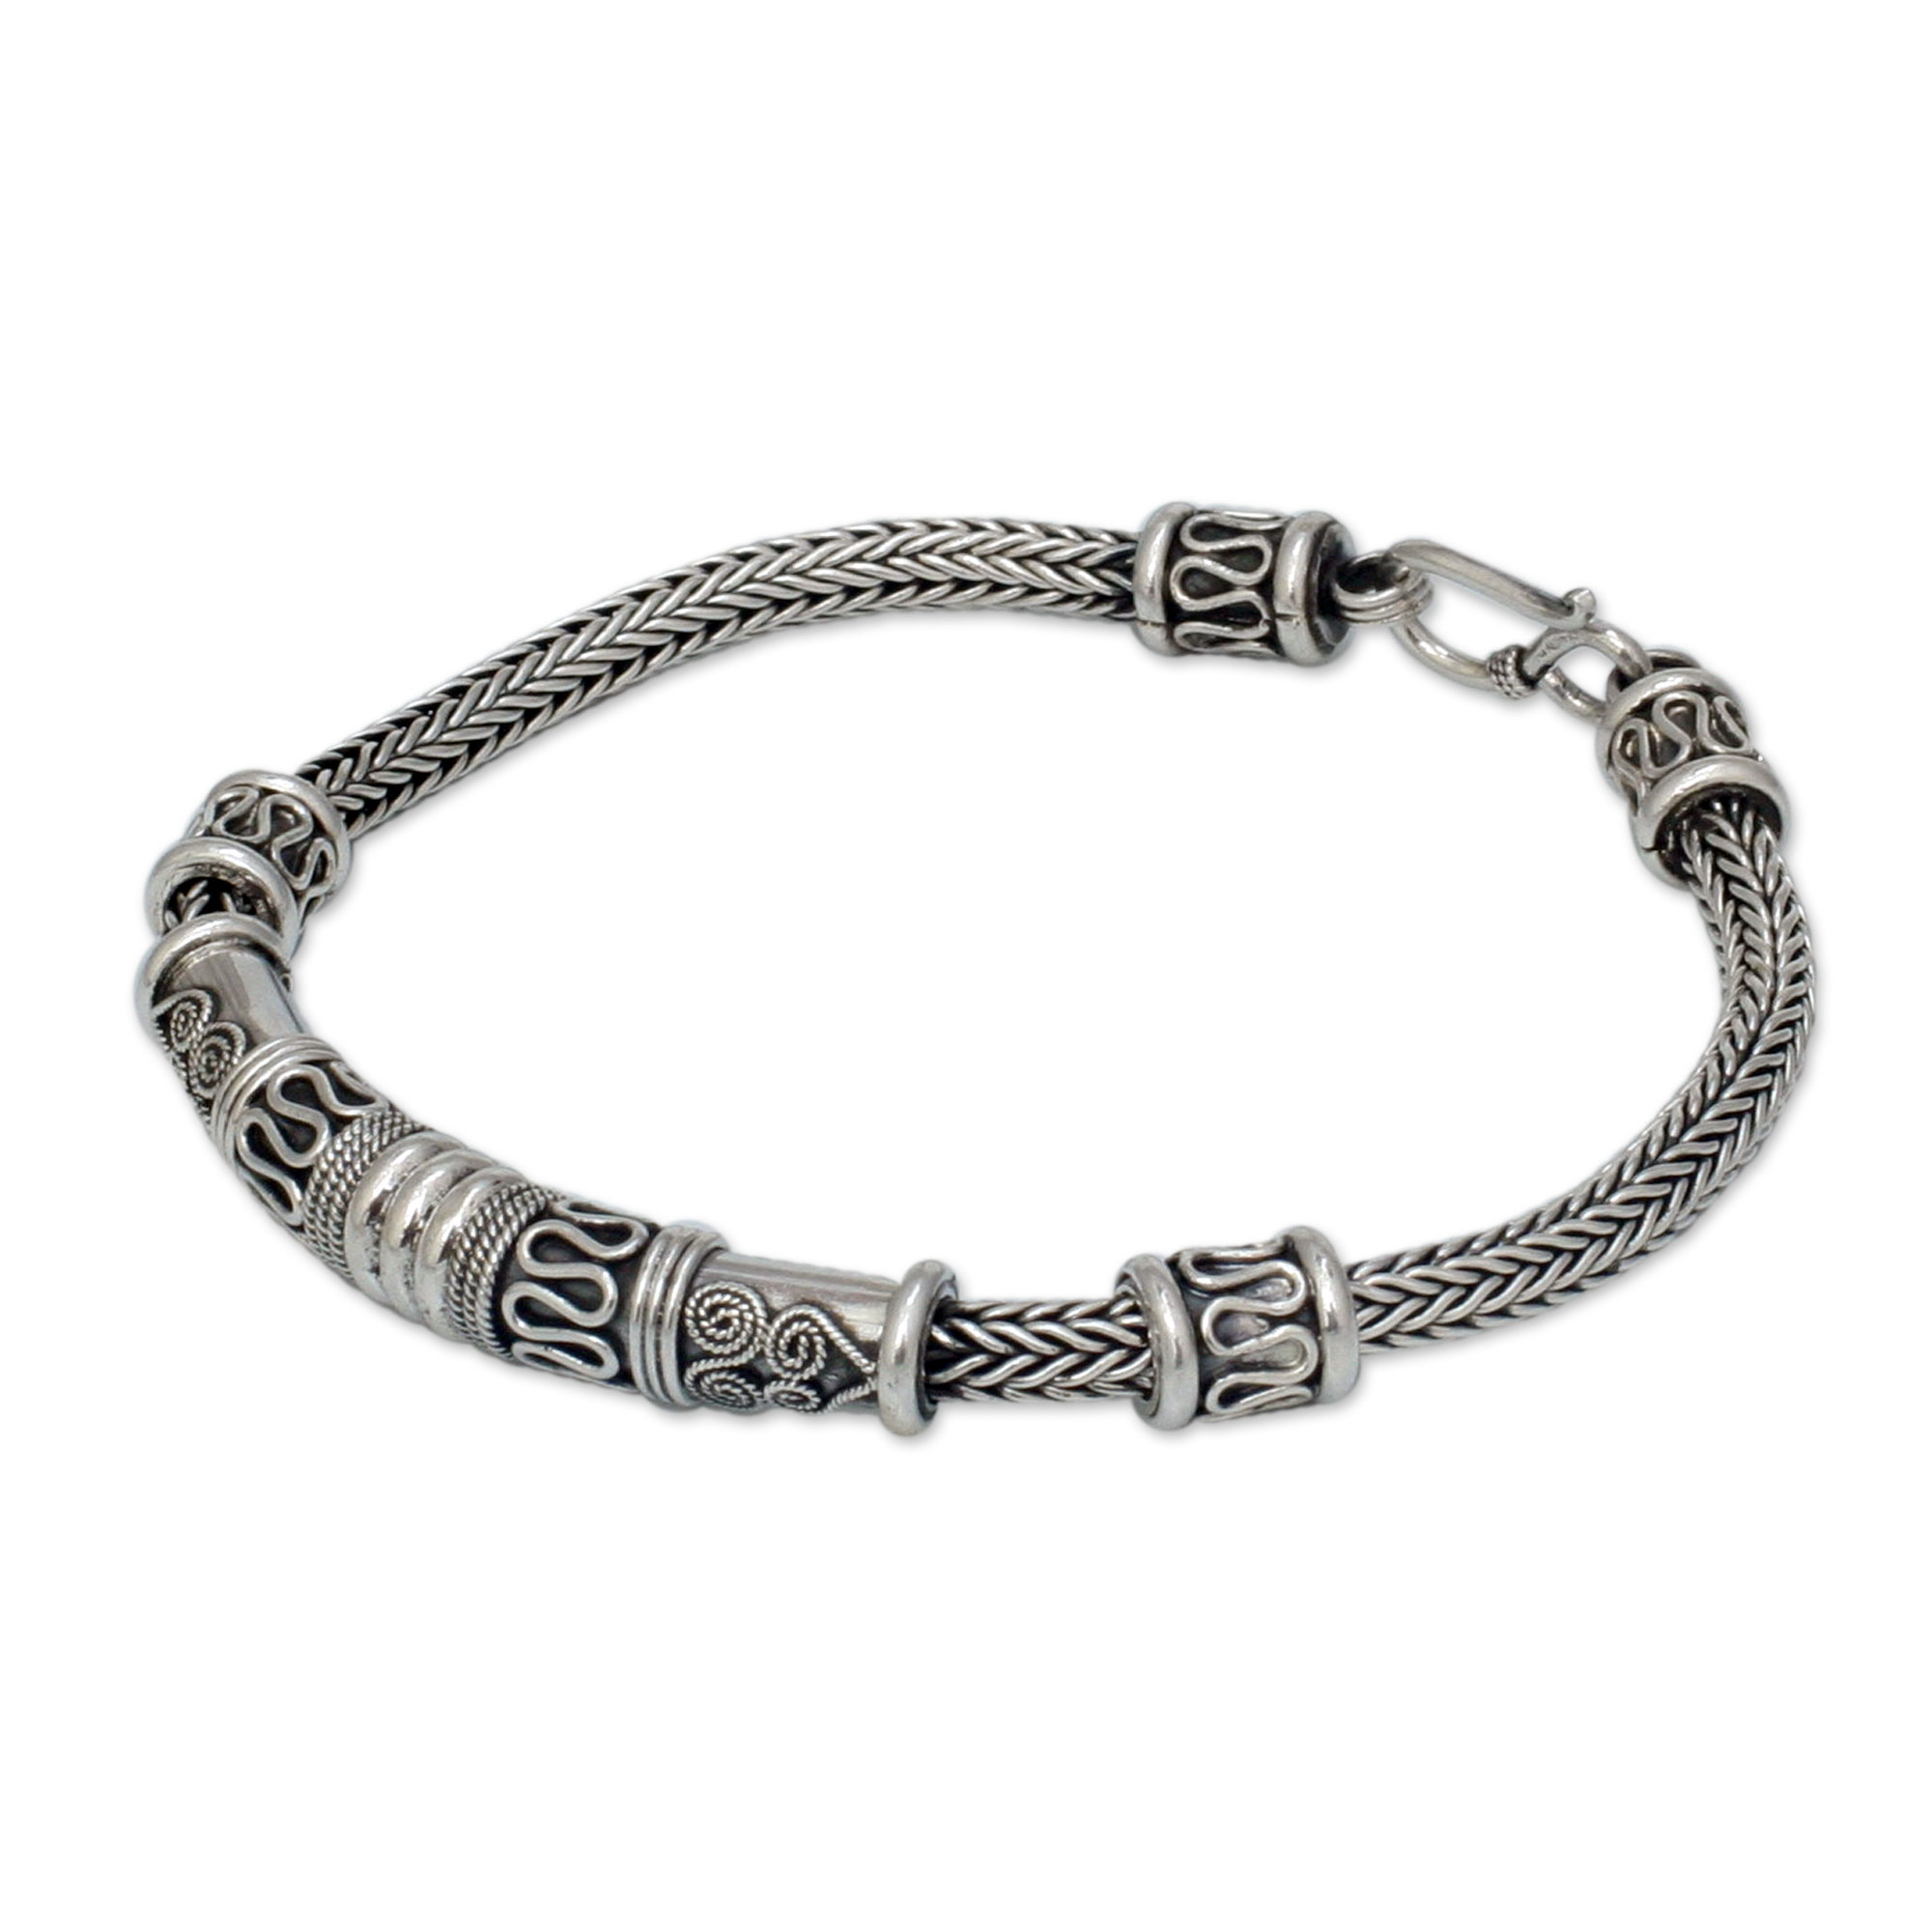 Men's Unique Sterling Silver Chain Bracelet - Royal Scrolls | NOVICA